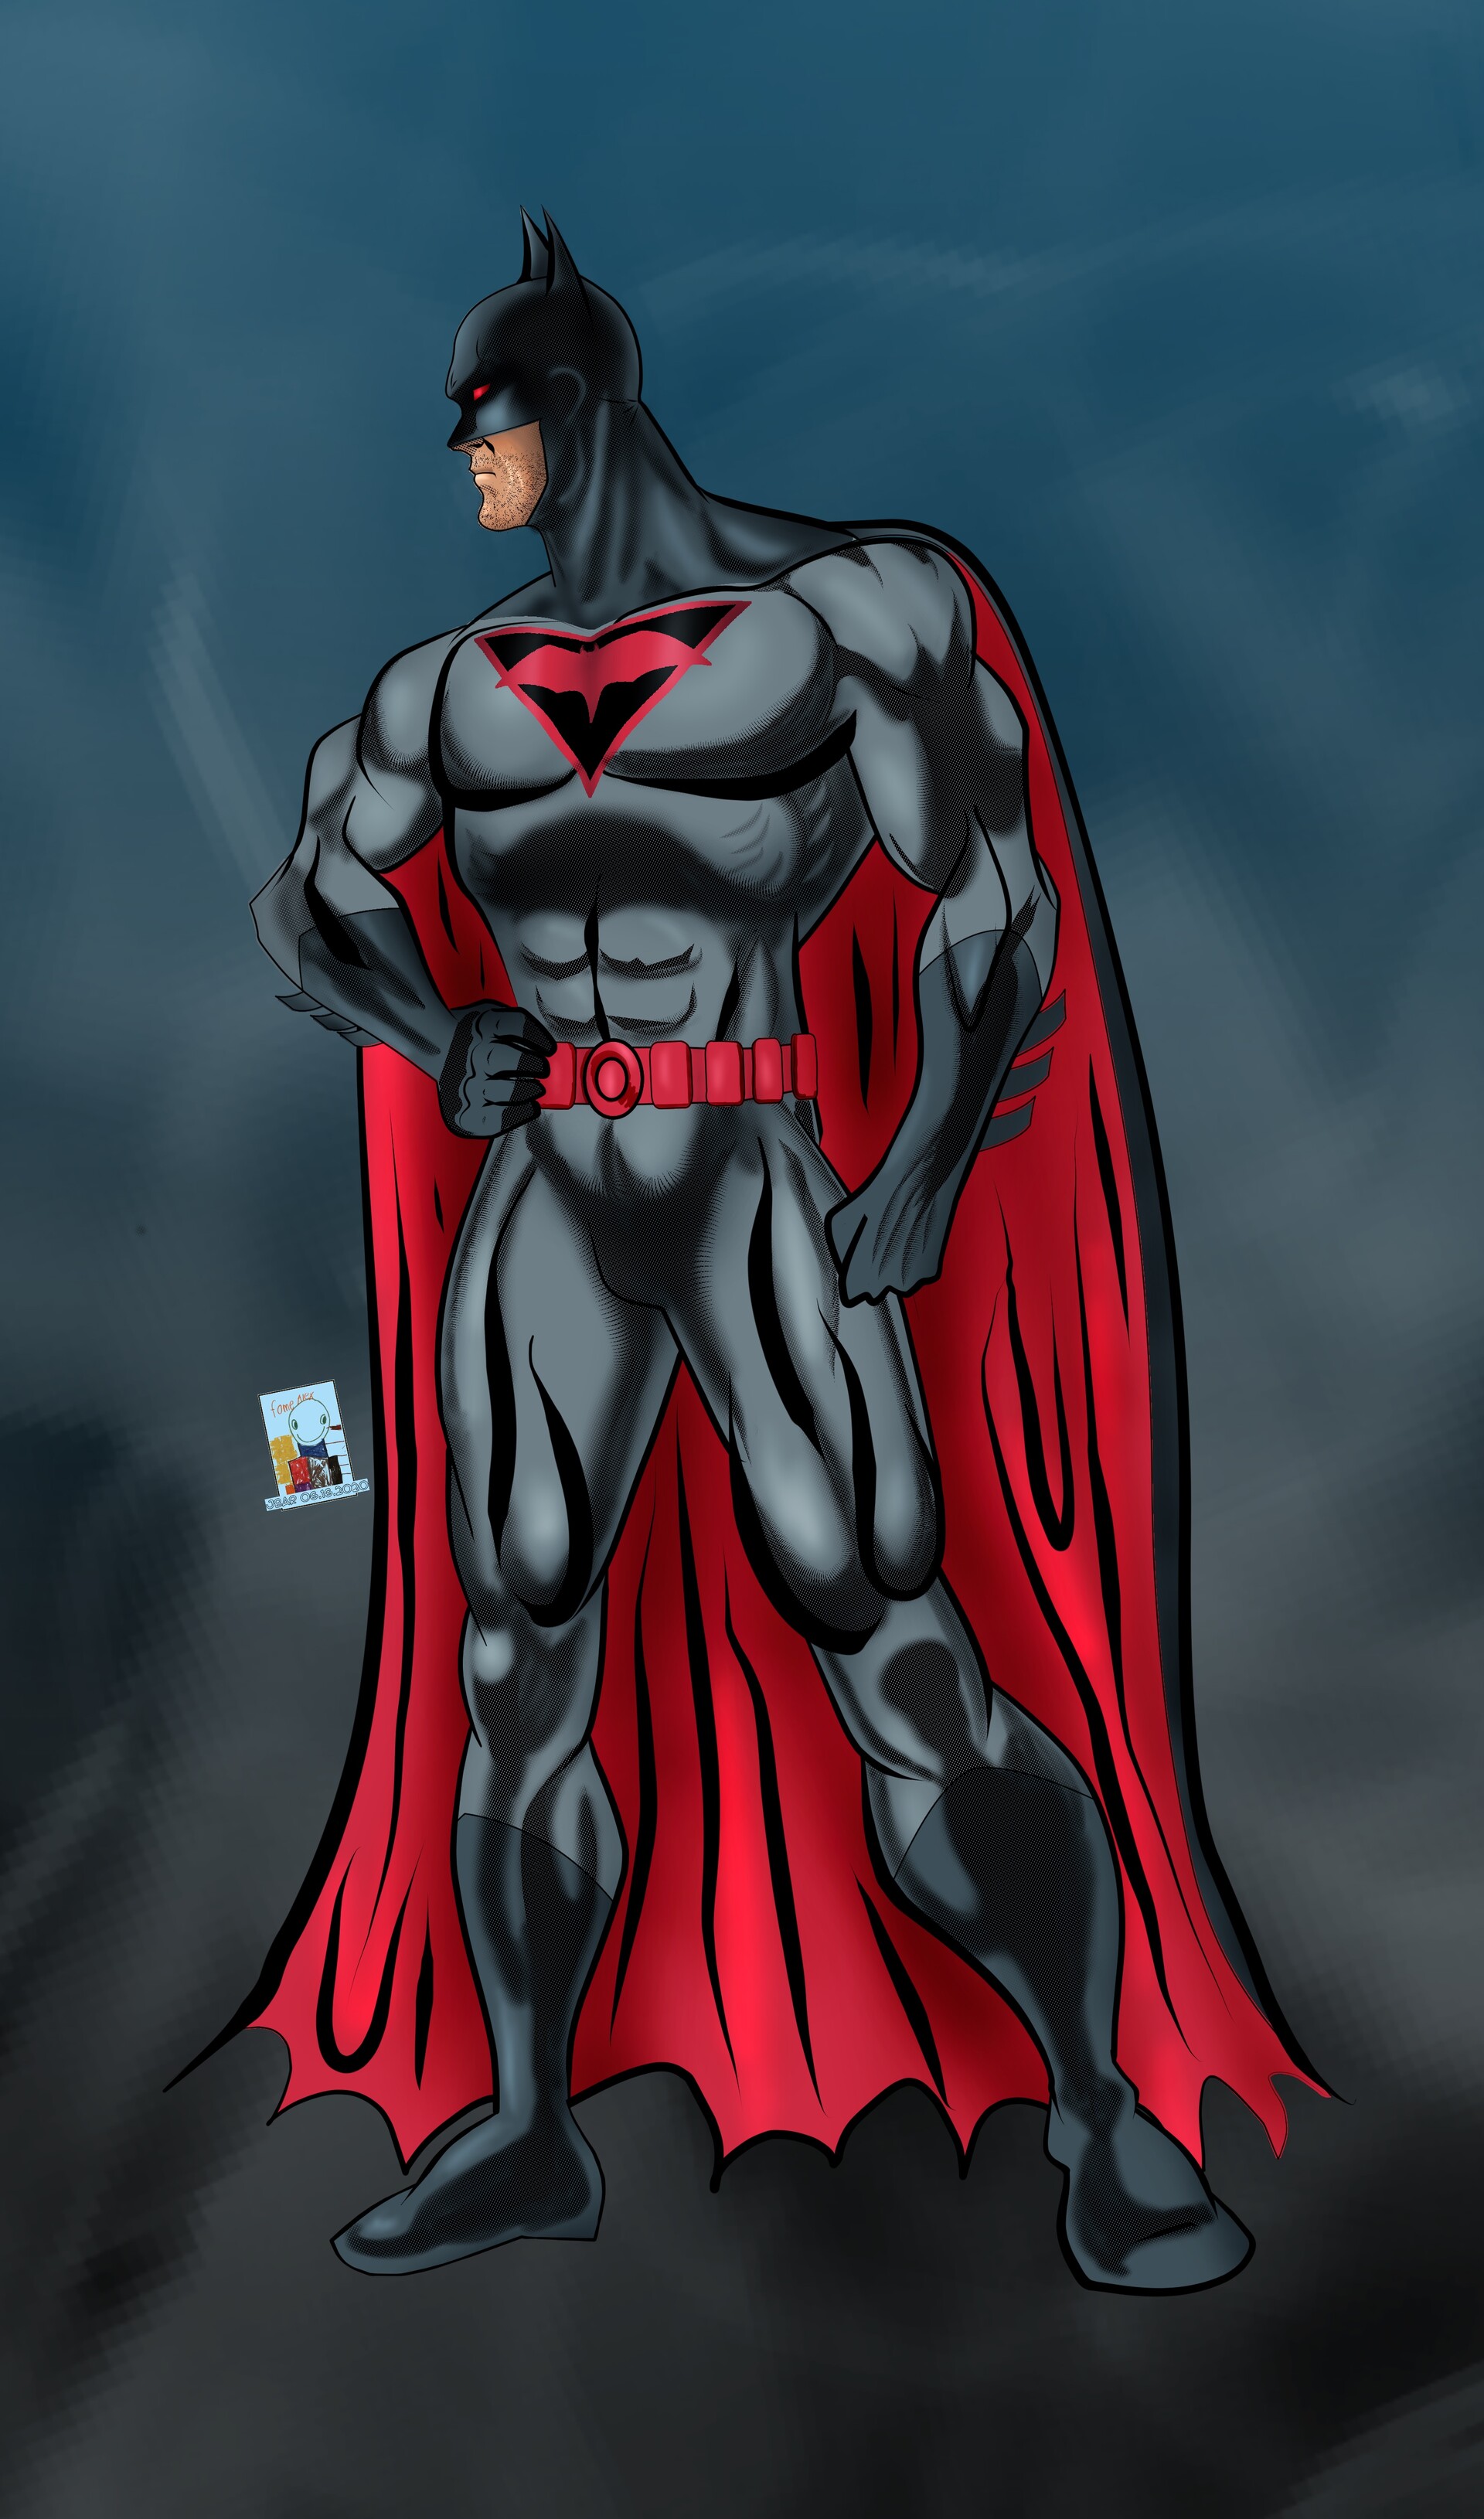 Batman (Thomas Wayne" from Earth-2.